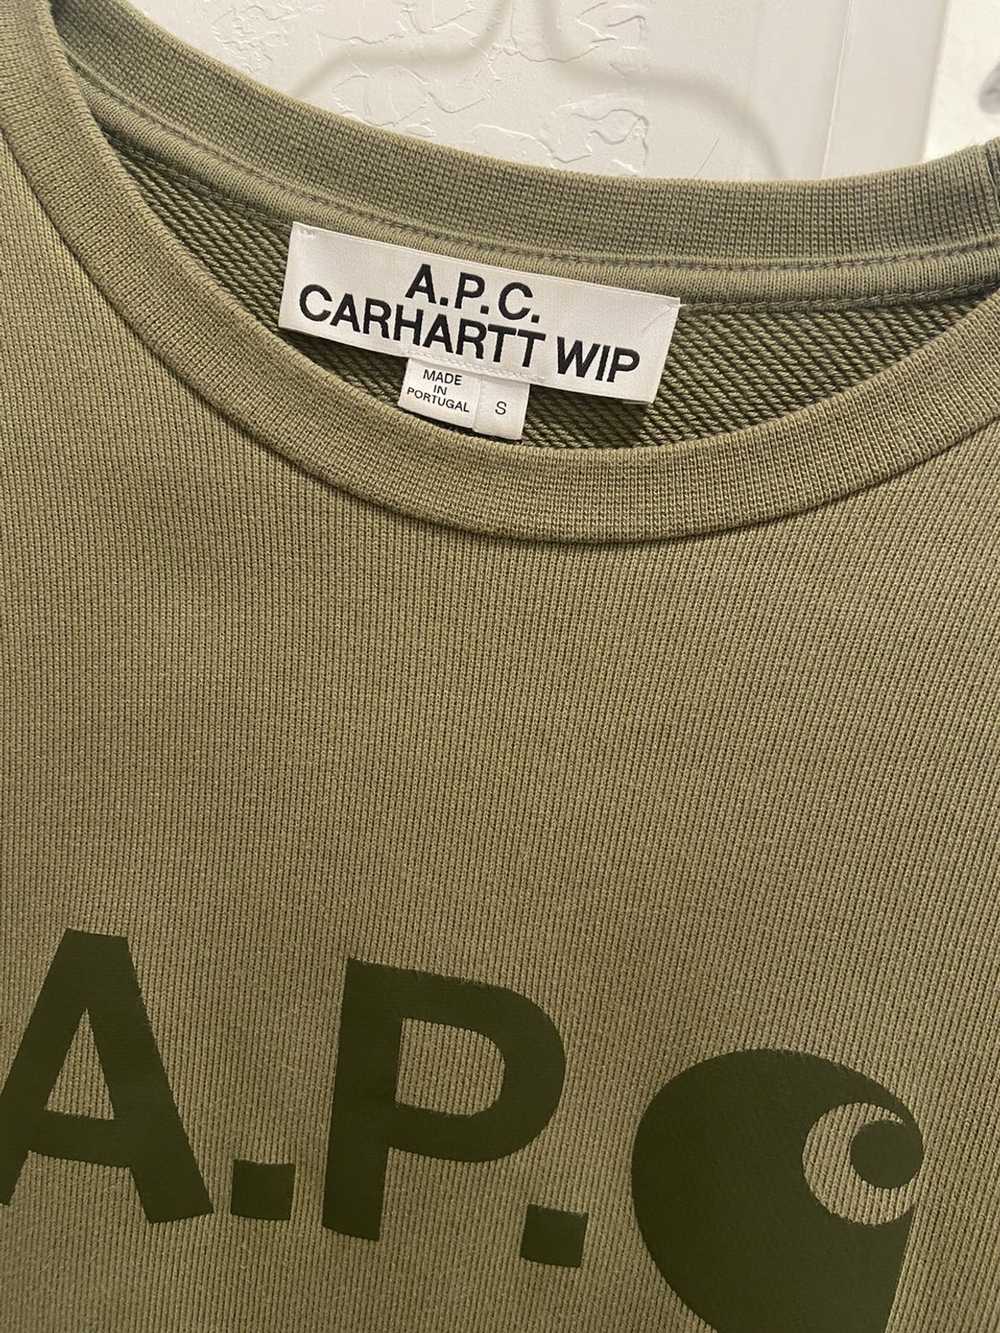 A.P.C. × Carhartt × Carhartt Wip A.P.C. x Carharrt - image 4